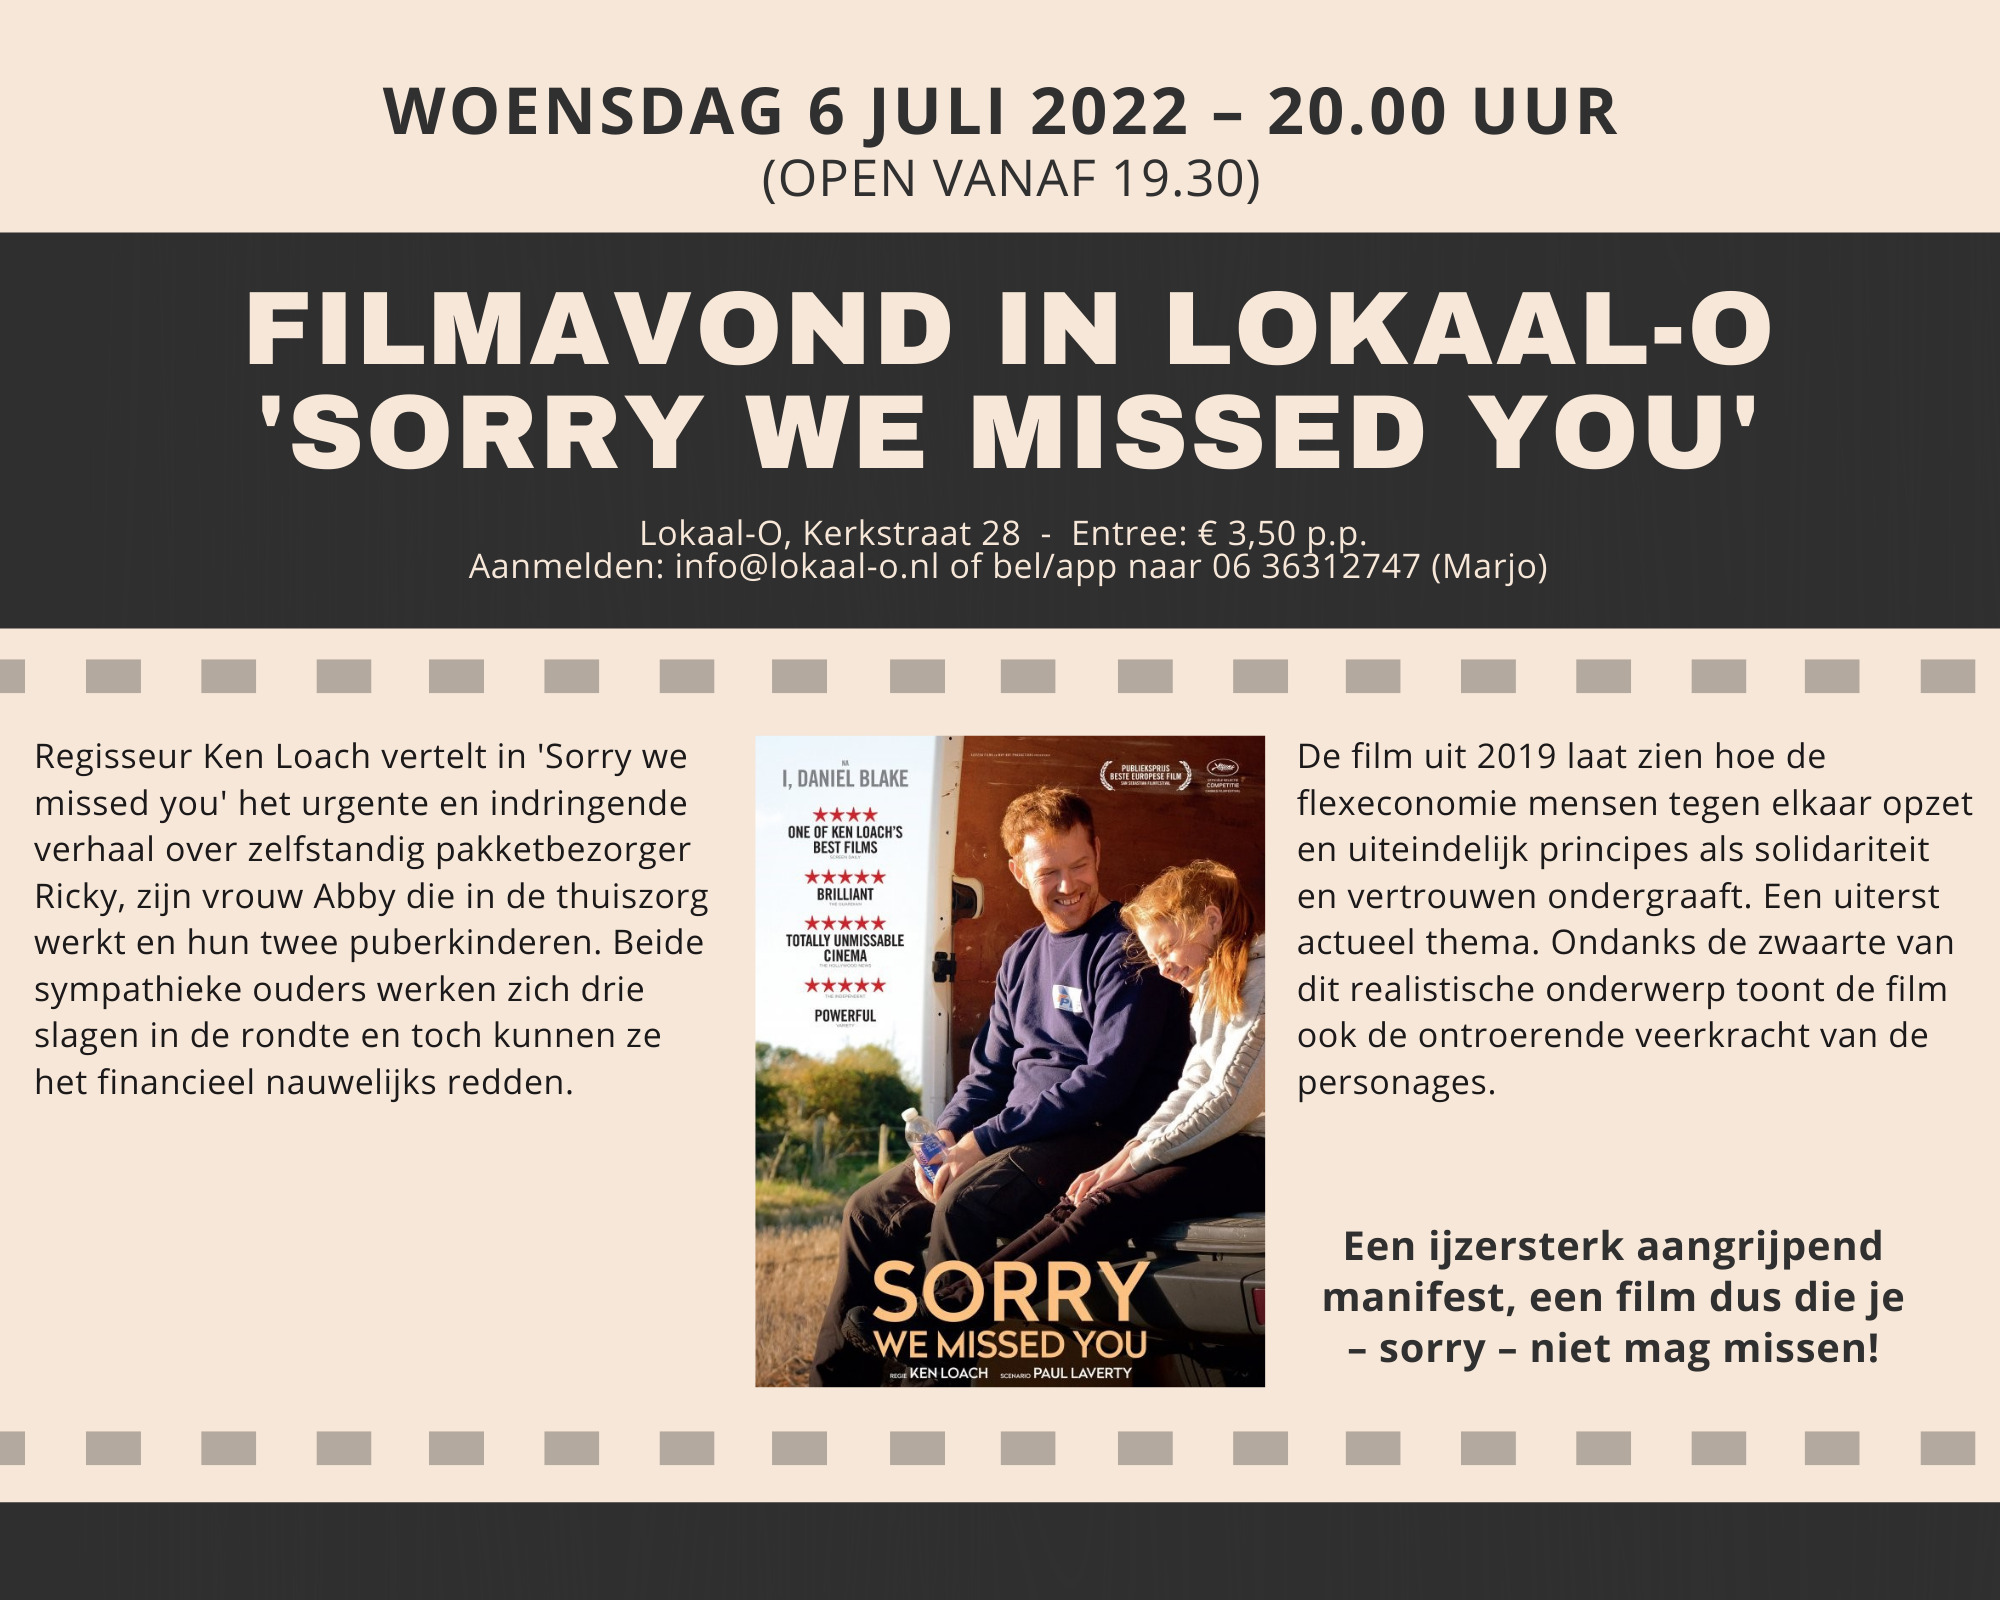 Je bekijkt nu Filmavond in Lokaal-O: “Sorry we missed you”